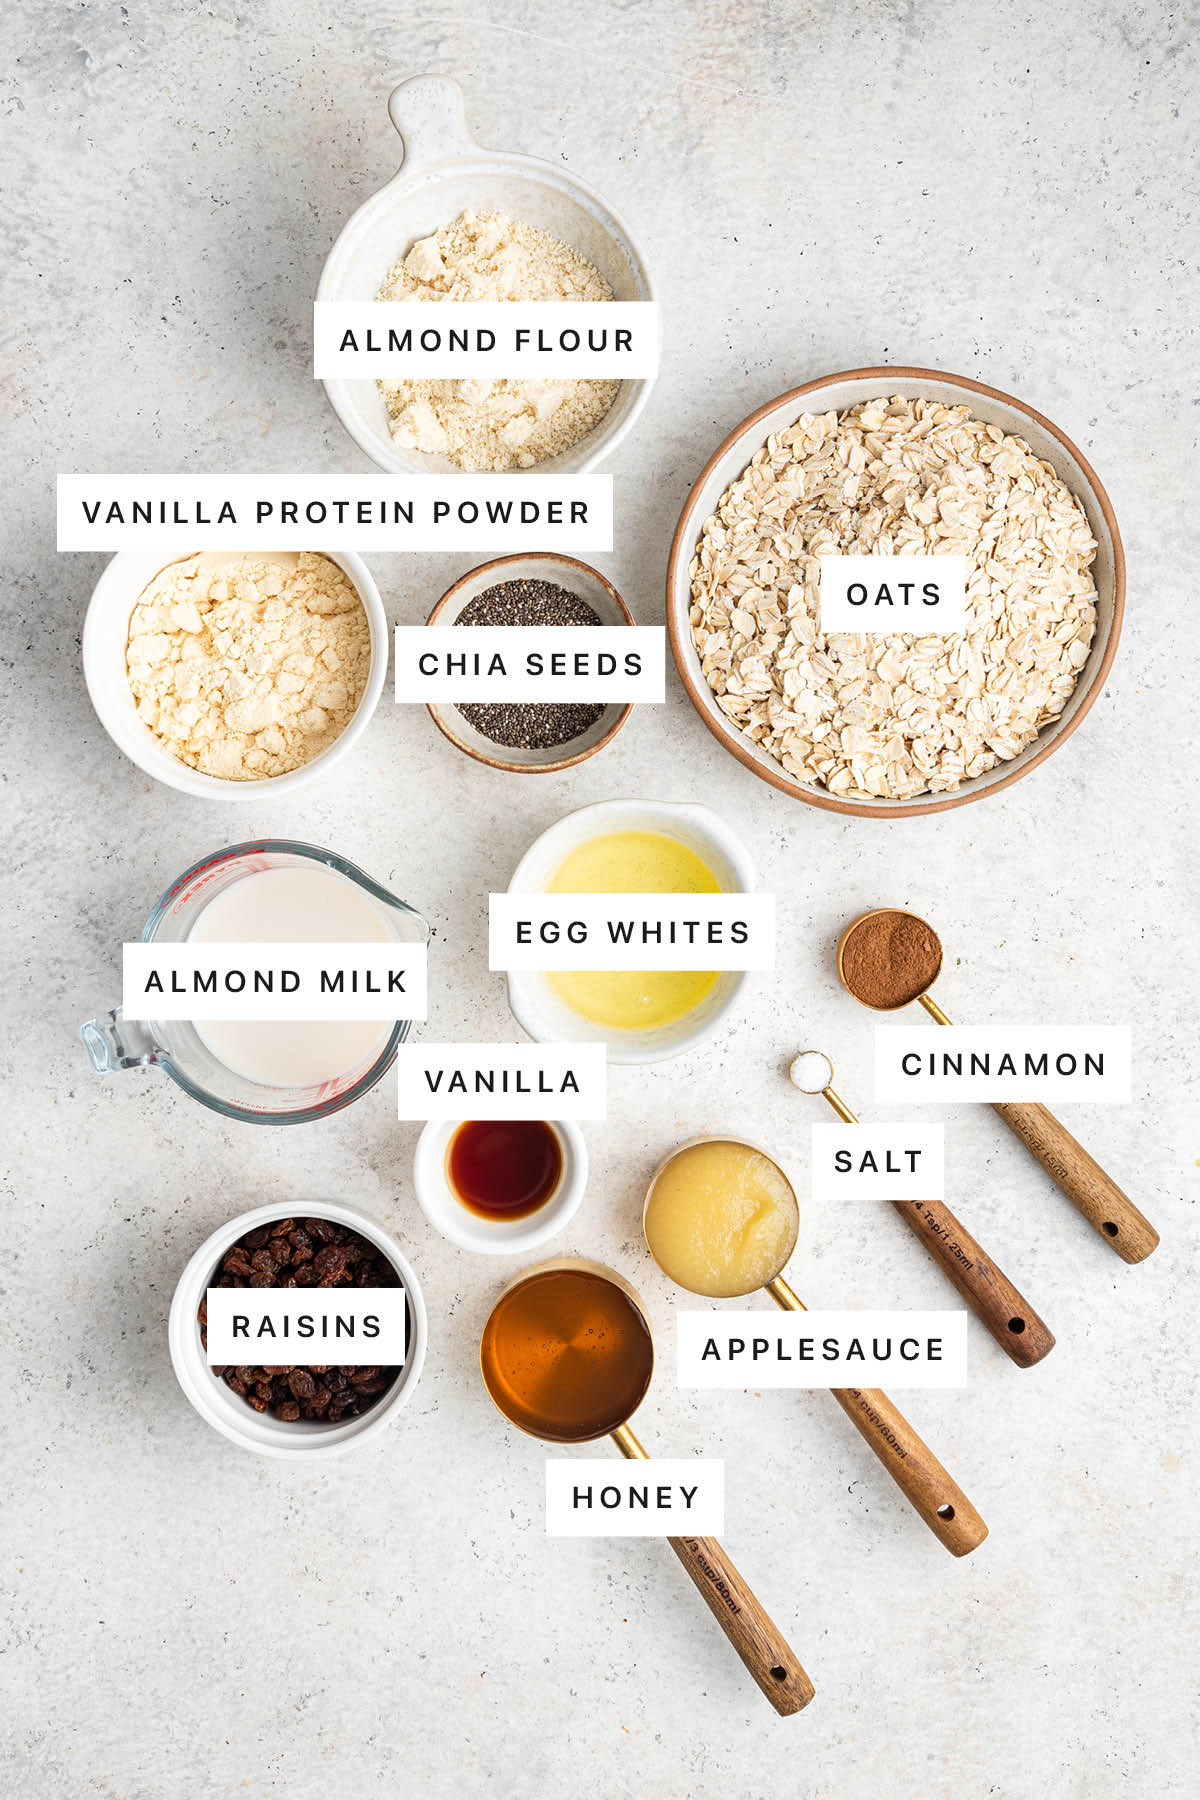 Ingredients measured out to make Oatmeal Raisin Protein Bars: almond flour, vanilla protein powder, chia seeds, oats, almond milk, egg whites, vanilla, raisins, honey, applesauce, salt and cinnamon.